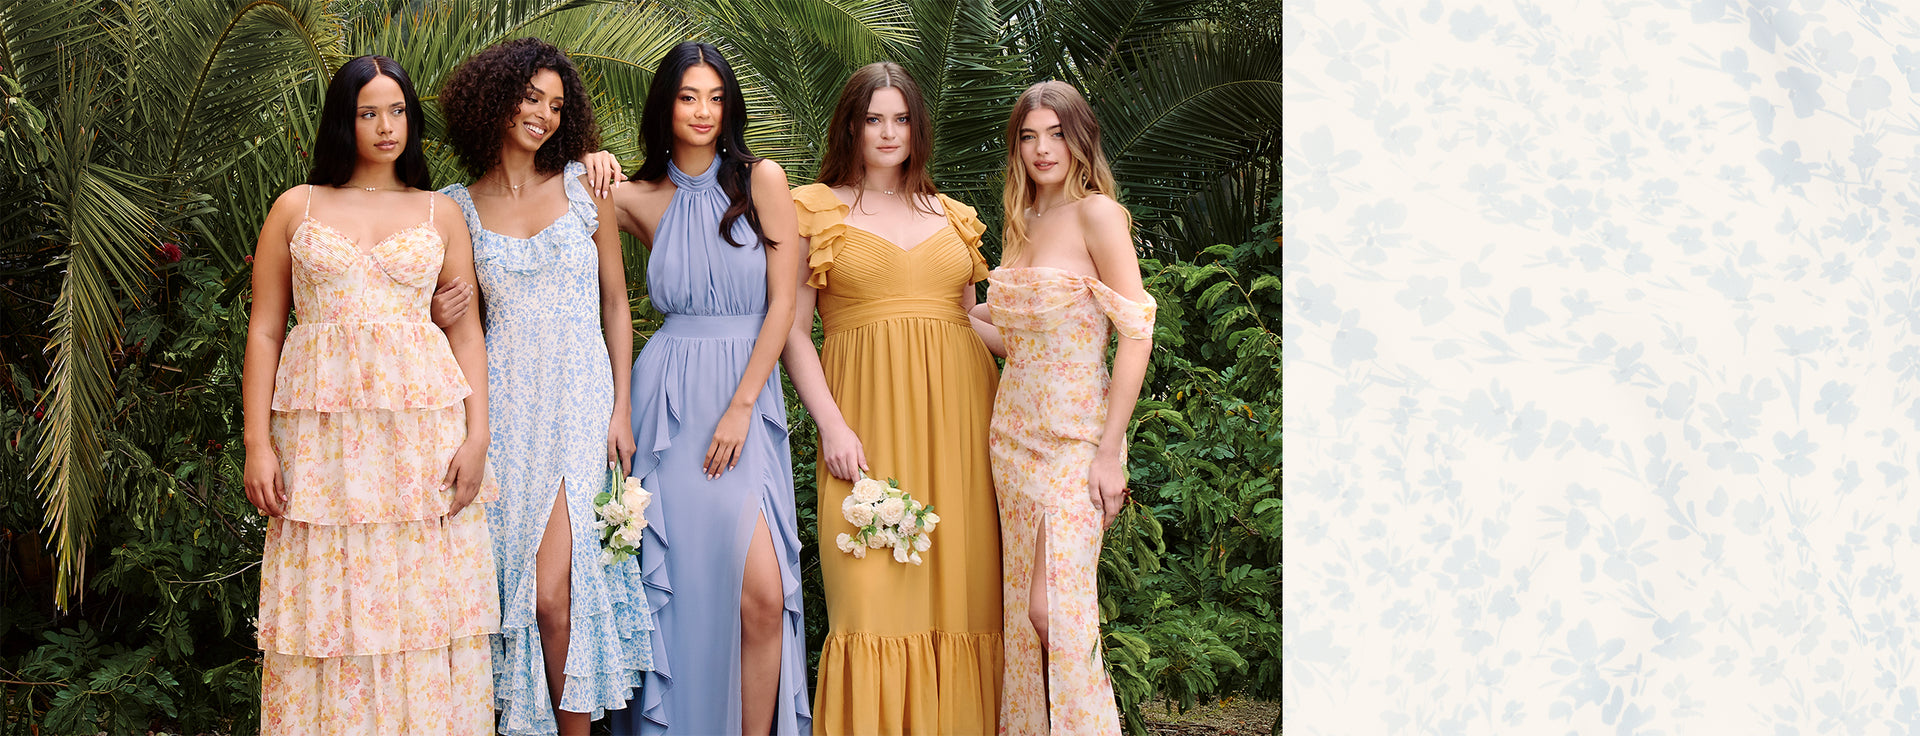 Meet the friends behind Birdy Grey's $99 bridesmaid dresses